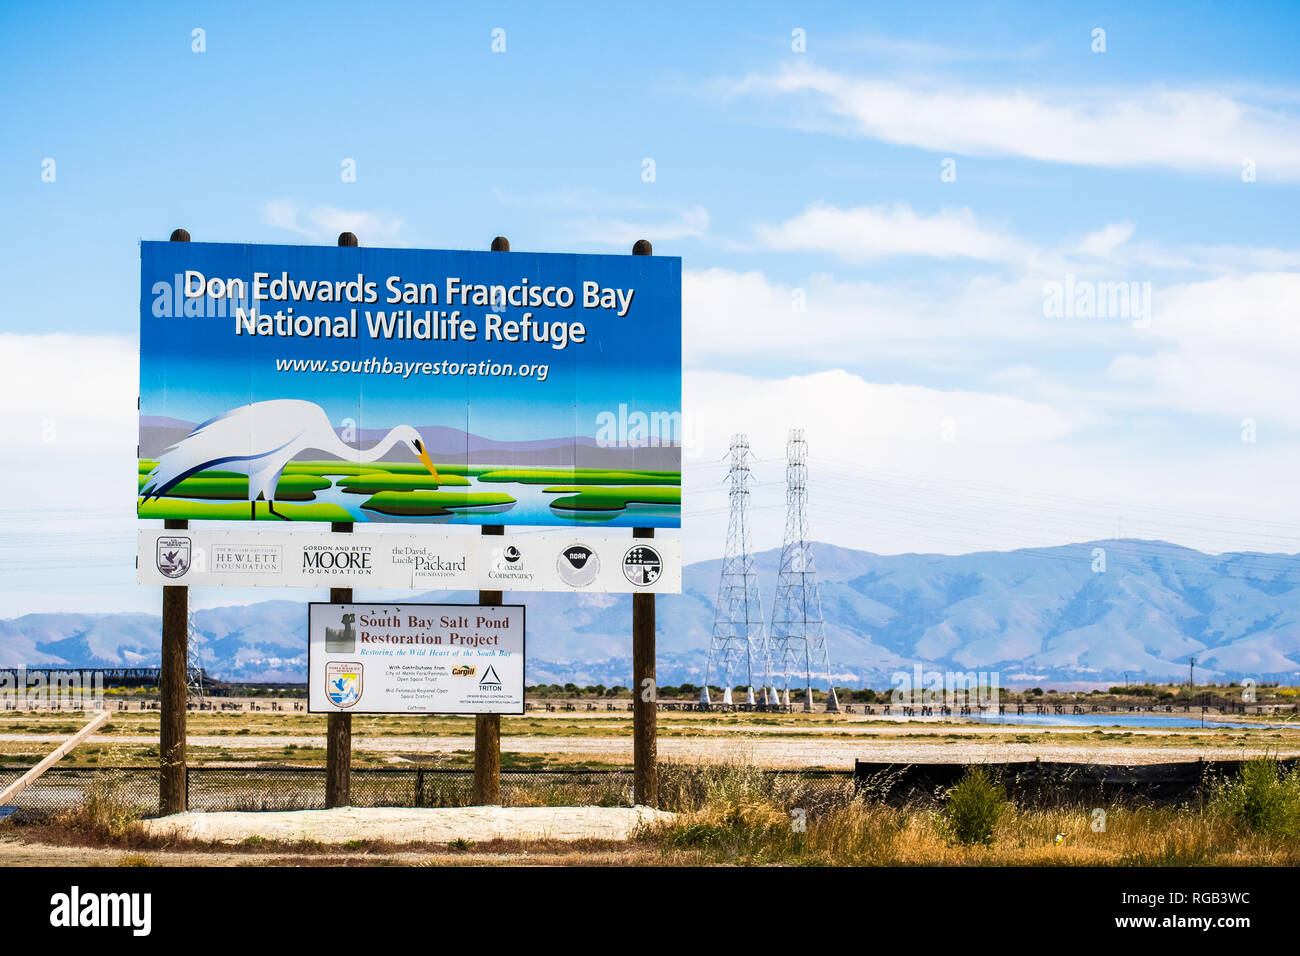 May 8, 2018 Menlo Park / CA / USA - "Don Edwards San Francisco Bay National Wildlife Refuge" and "South Bay Salt Pond Restoration Project" billboards  Stock Photo